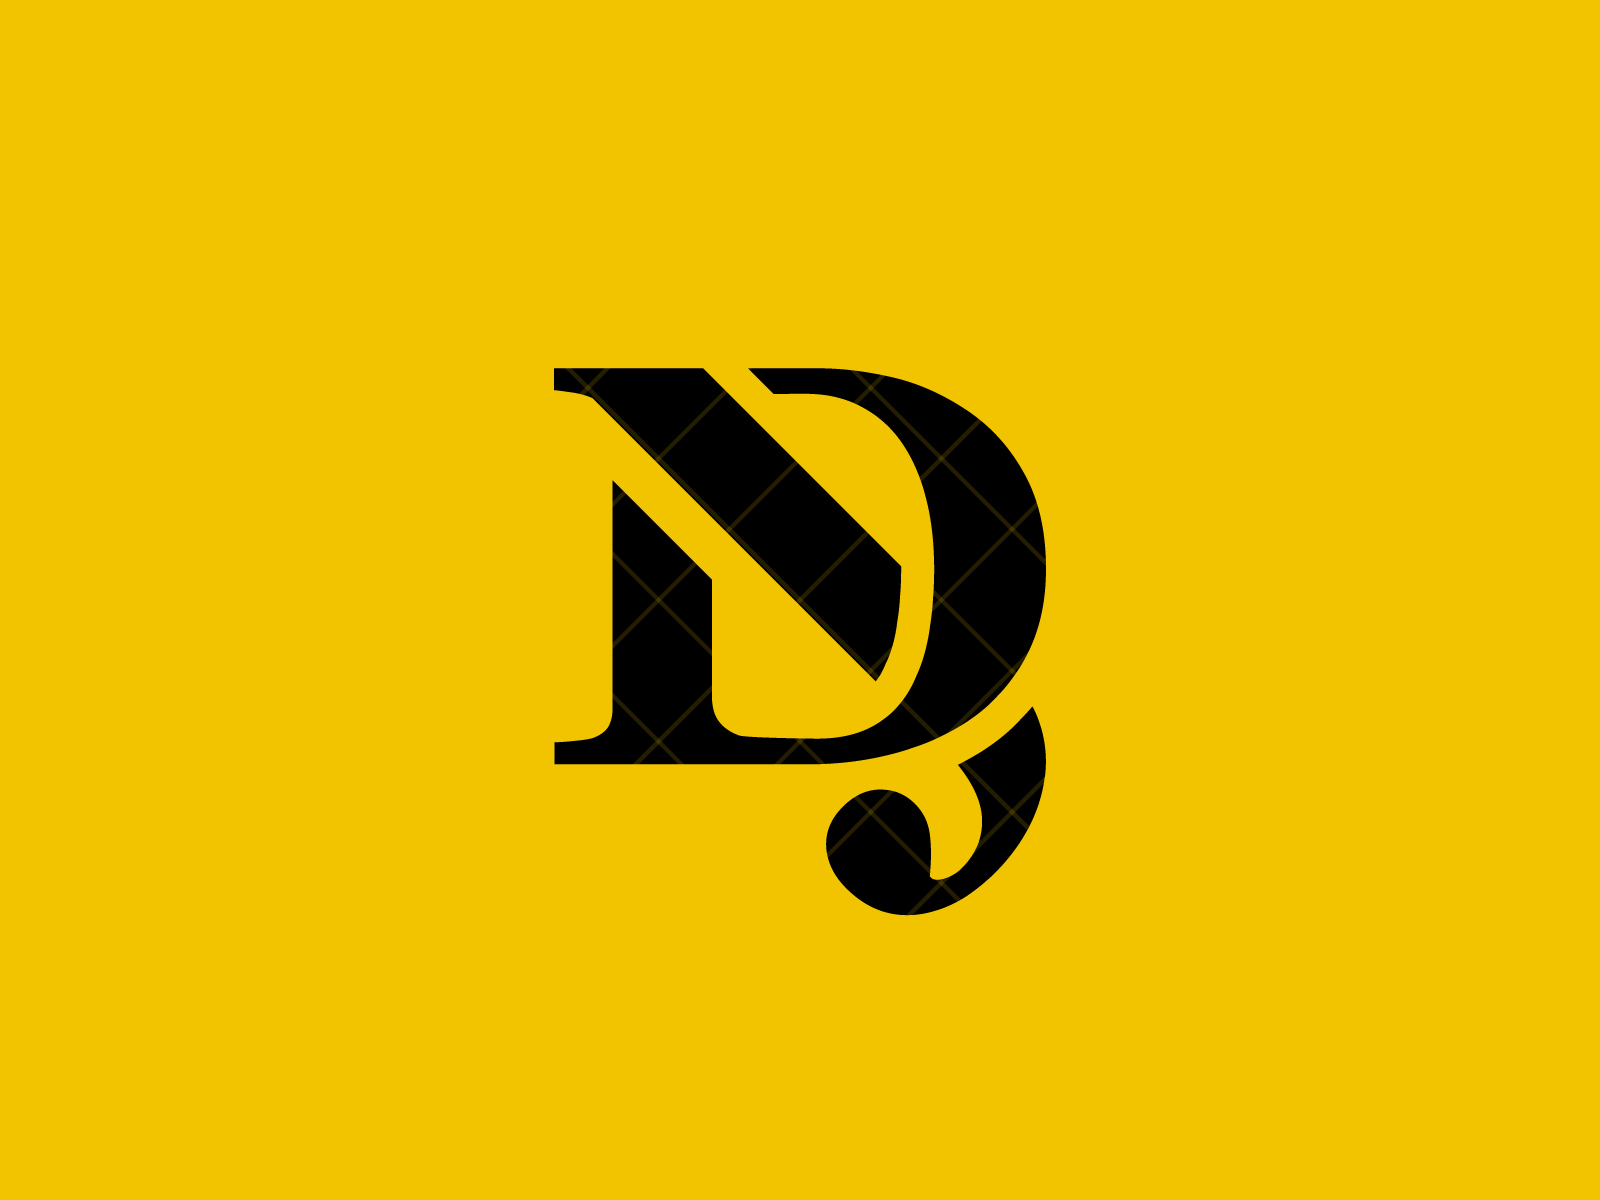 DS Logo by Sabuj Ali on Dribbble